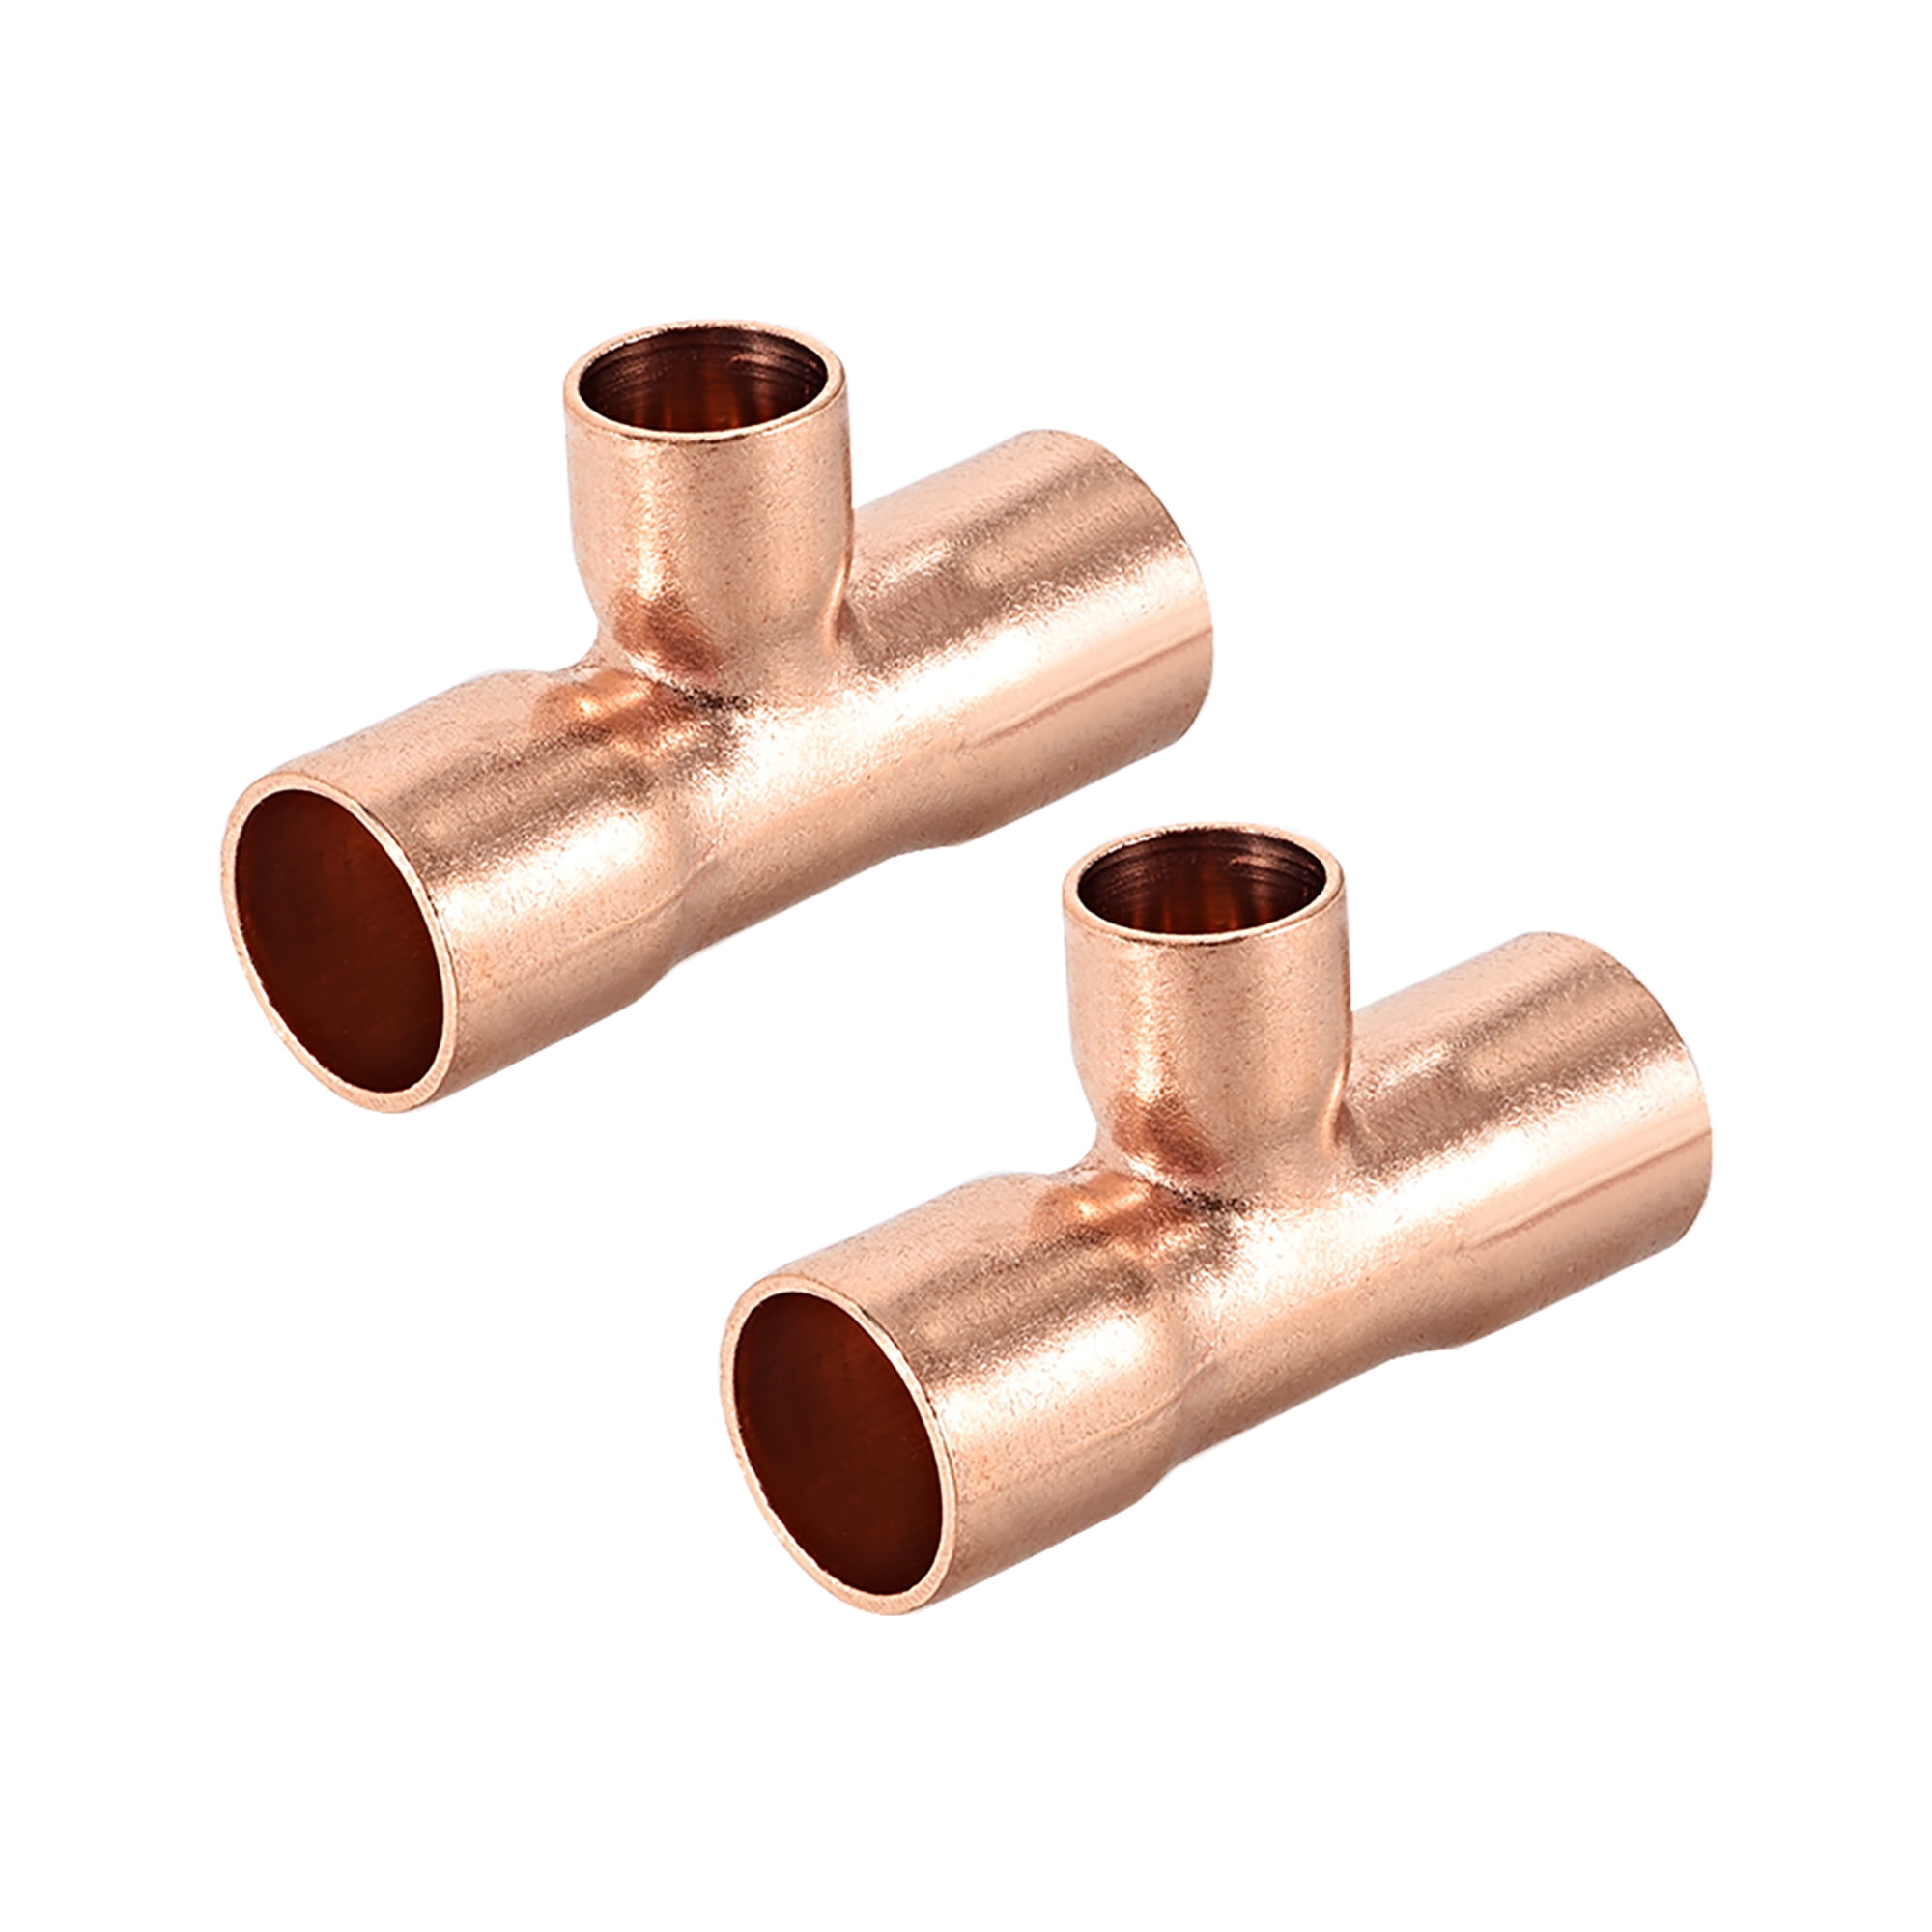 1/2-inch x 1/4-inch Copper Reducing Tee Copper Pressure Pipe Fitting 1 4 Inch Copper Tubing Home Depot